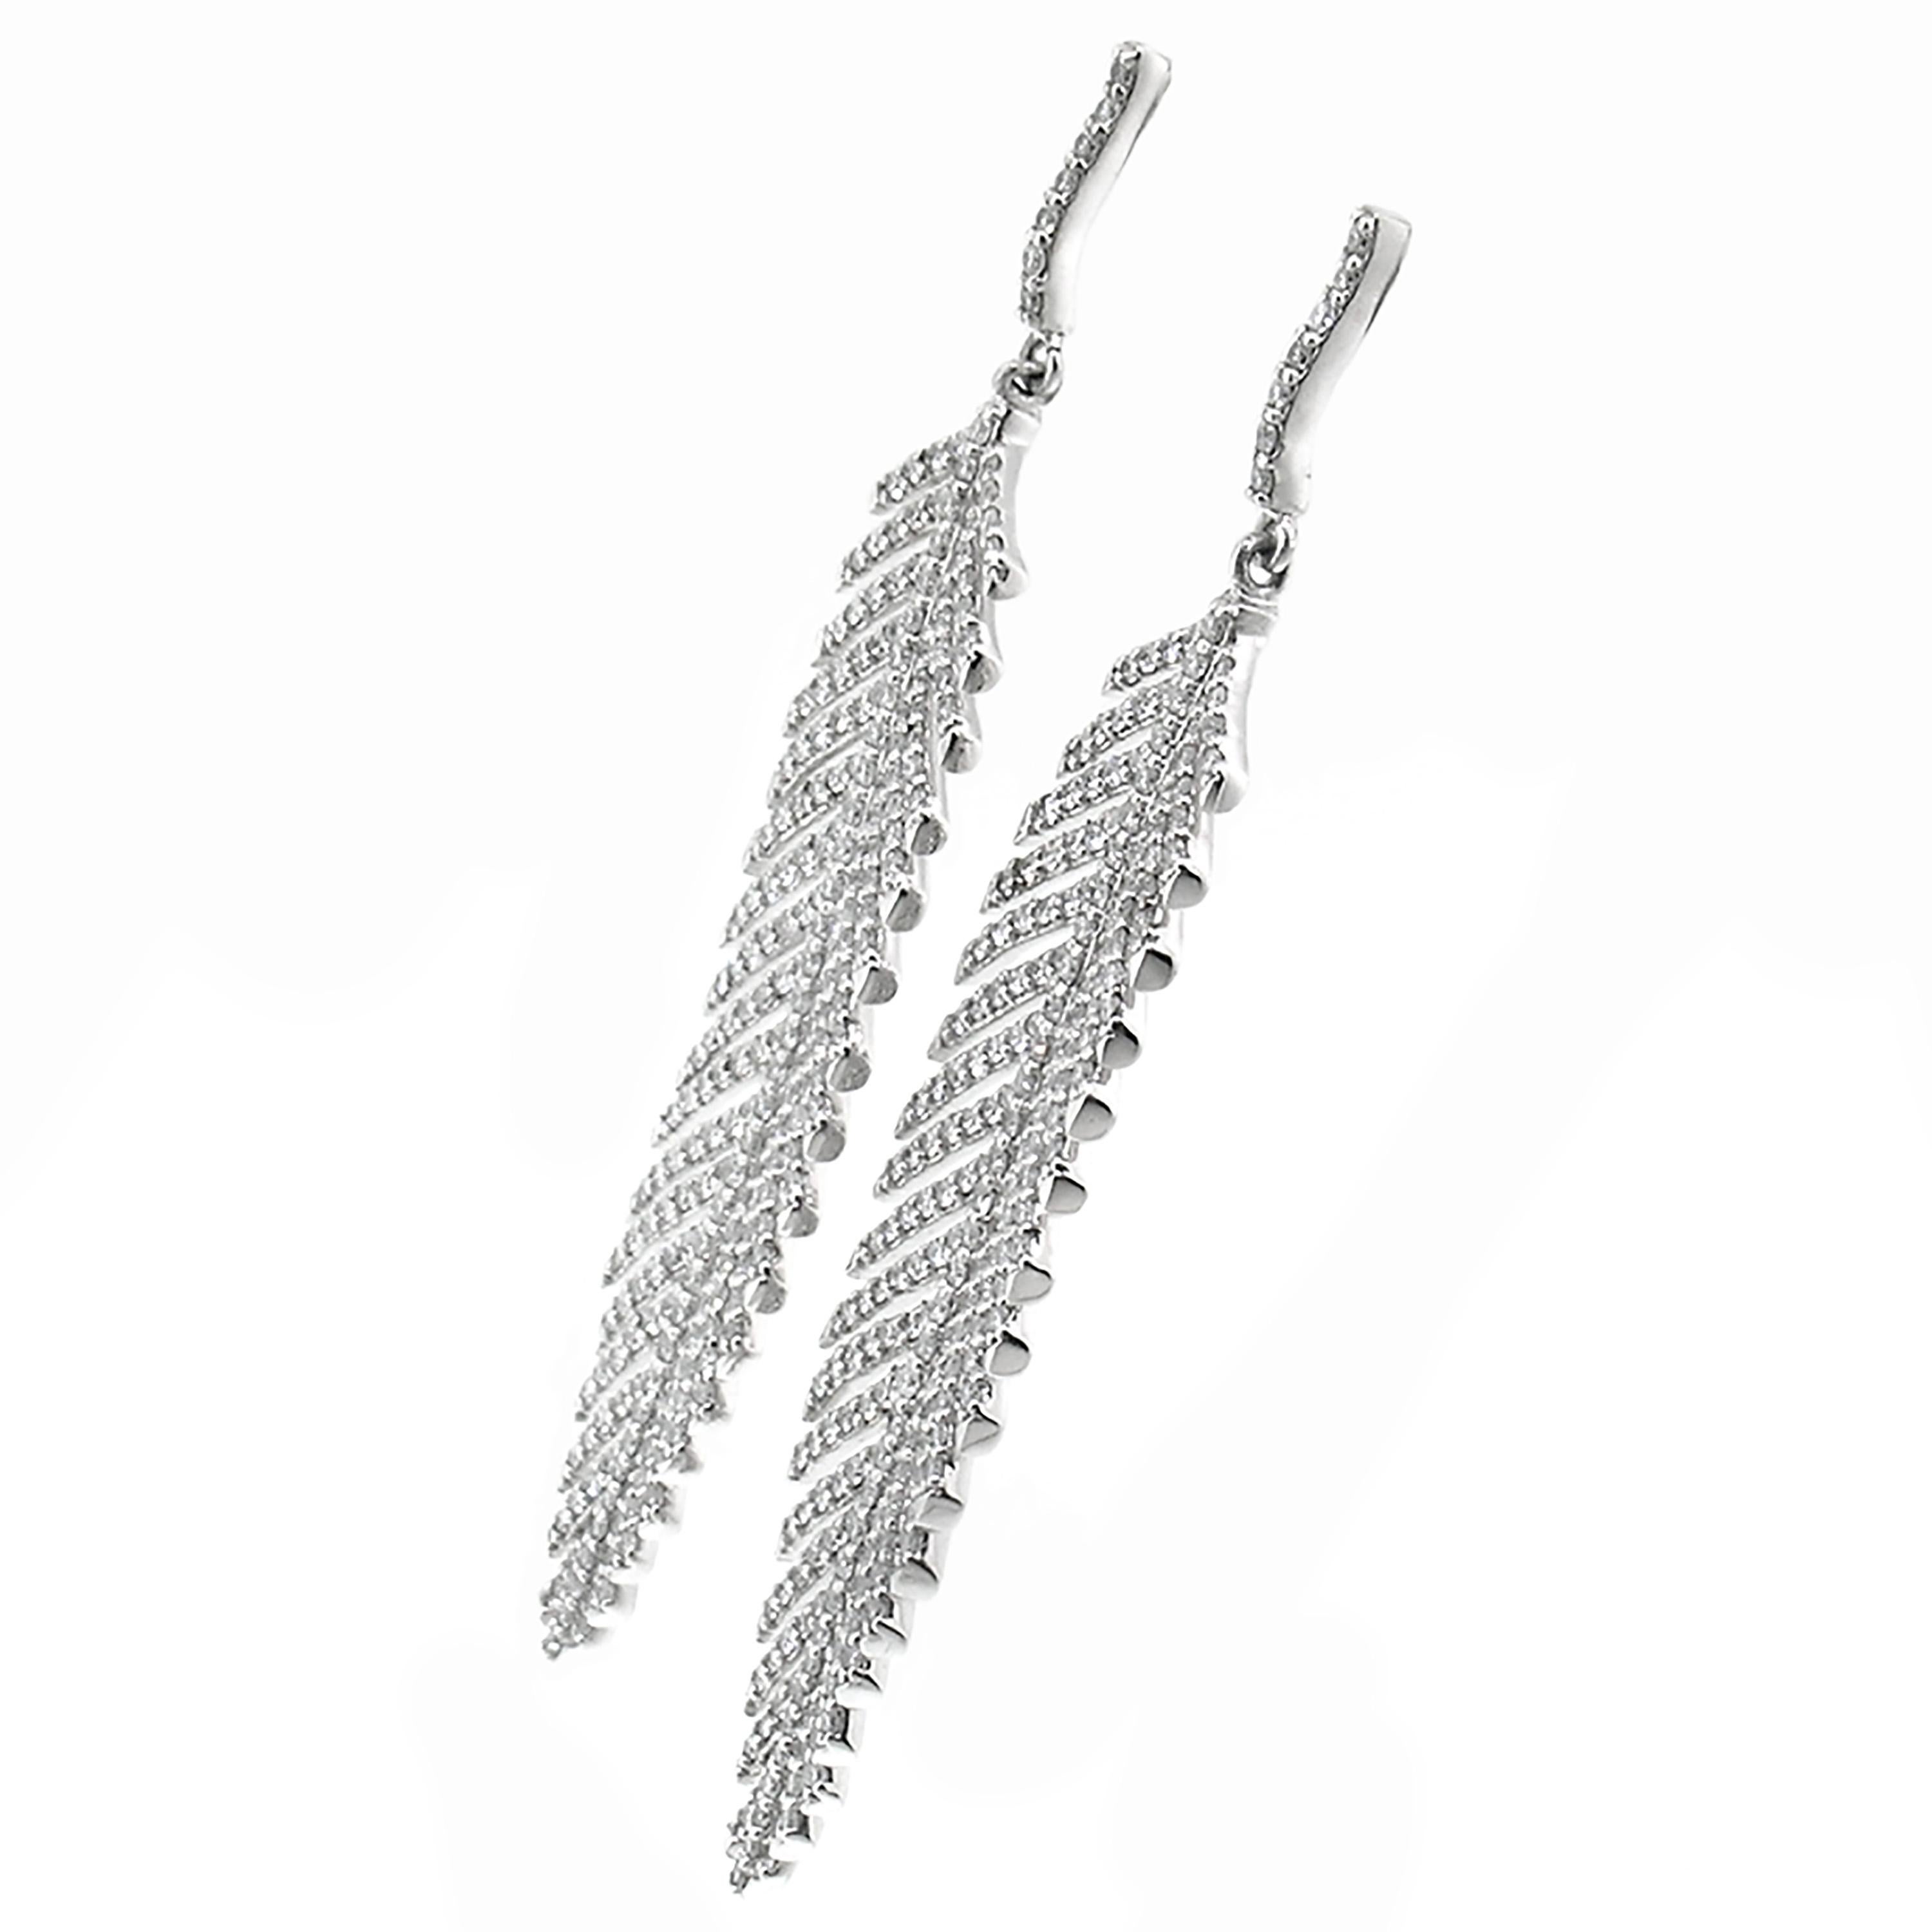 Round Cut 2.70 Carat Diamond and Platinum Handmade Feather Earrings by Dan Peligrad